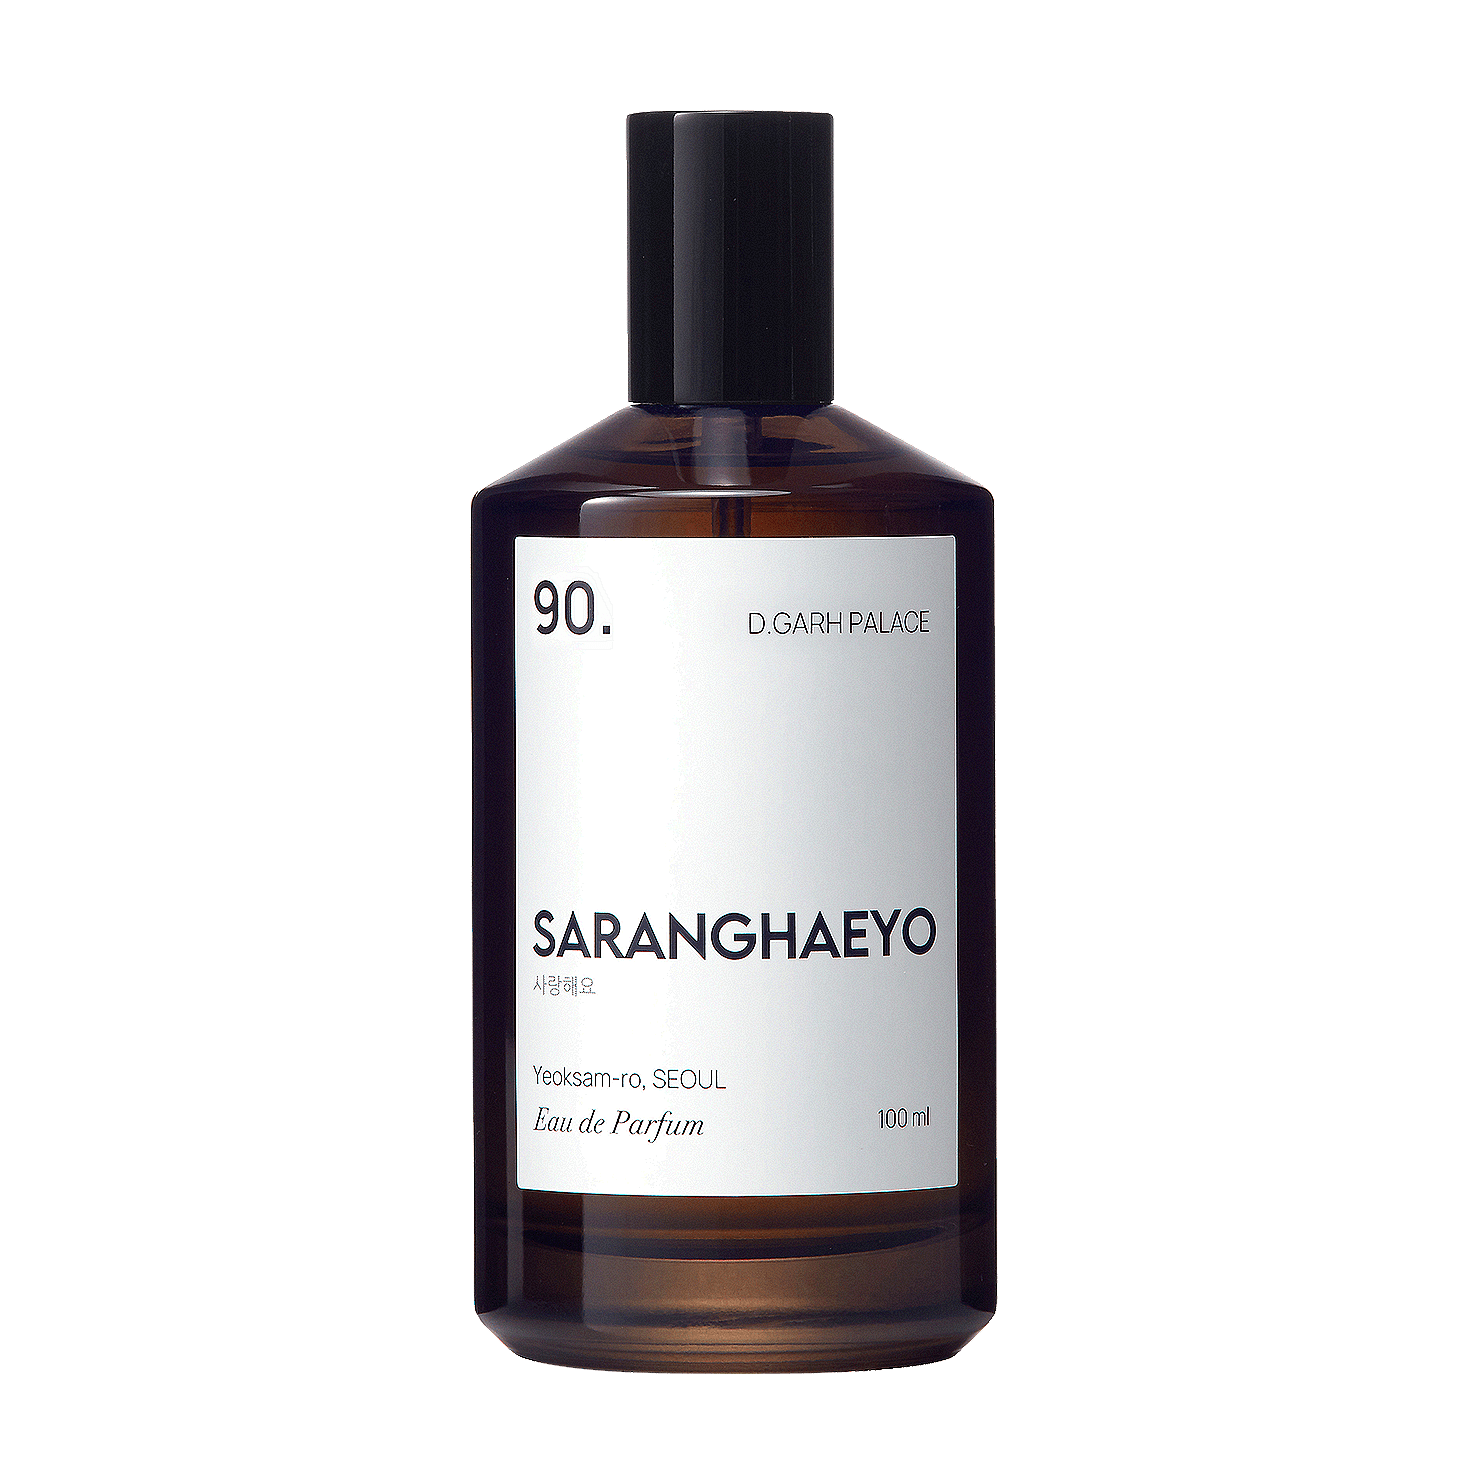 SARANGHAEYO | 90. D.Garh Palace EDP, 100 ml